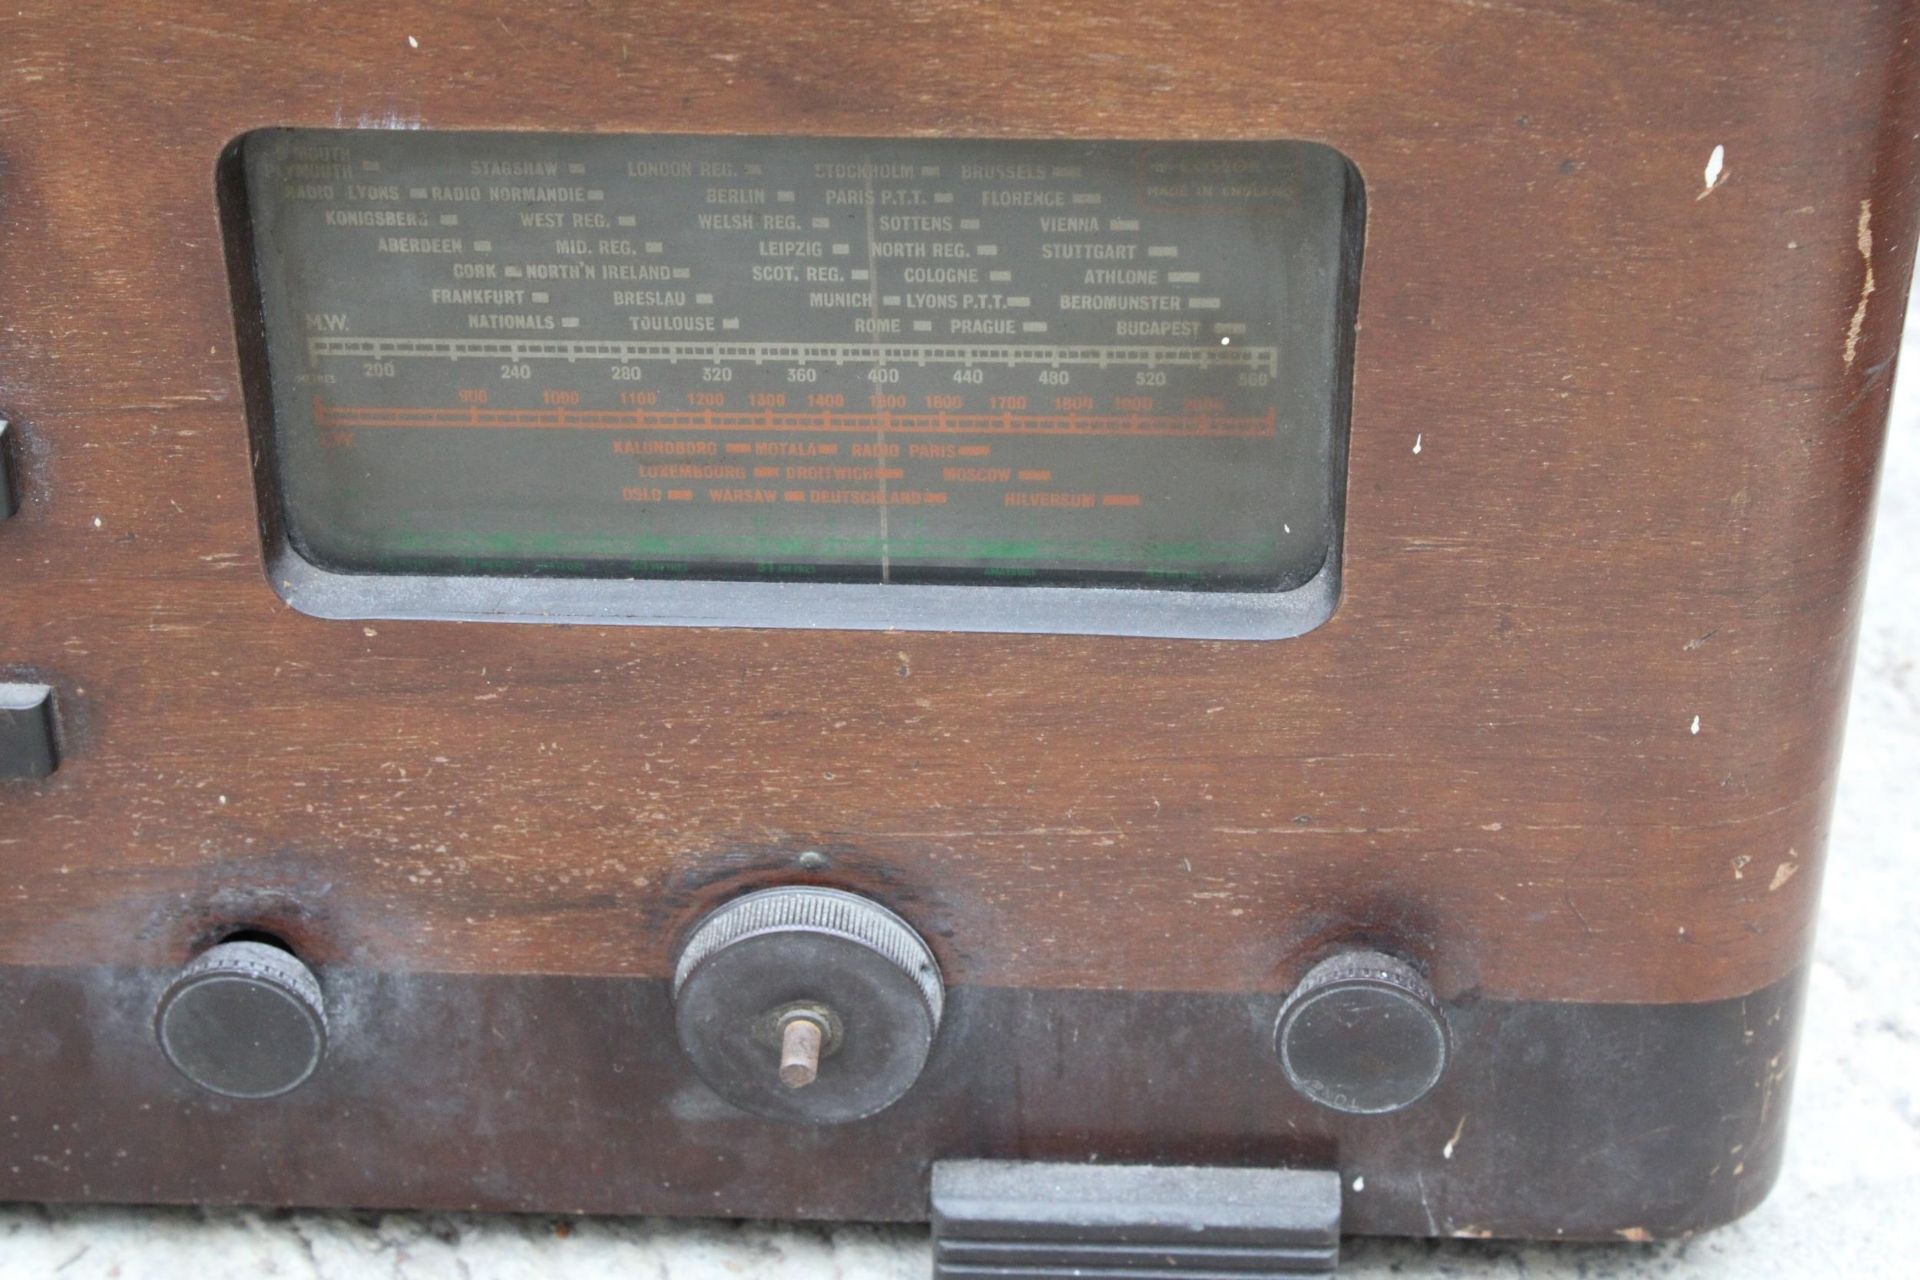 A VINTAGE WOODEN CASED VALVE RADIO - Image 2 of 2